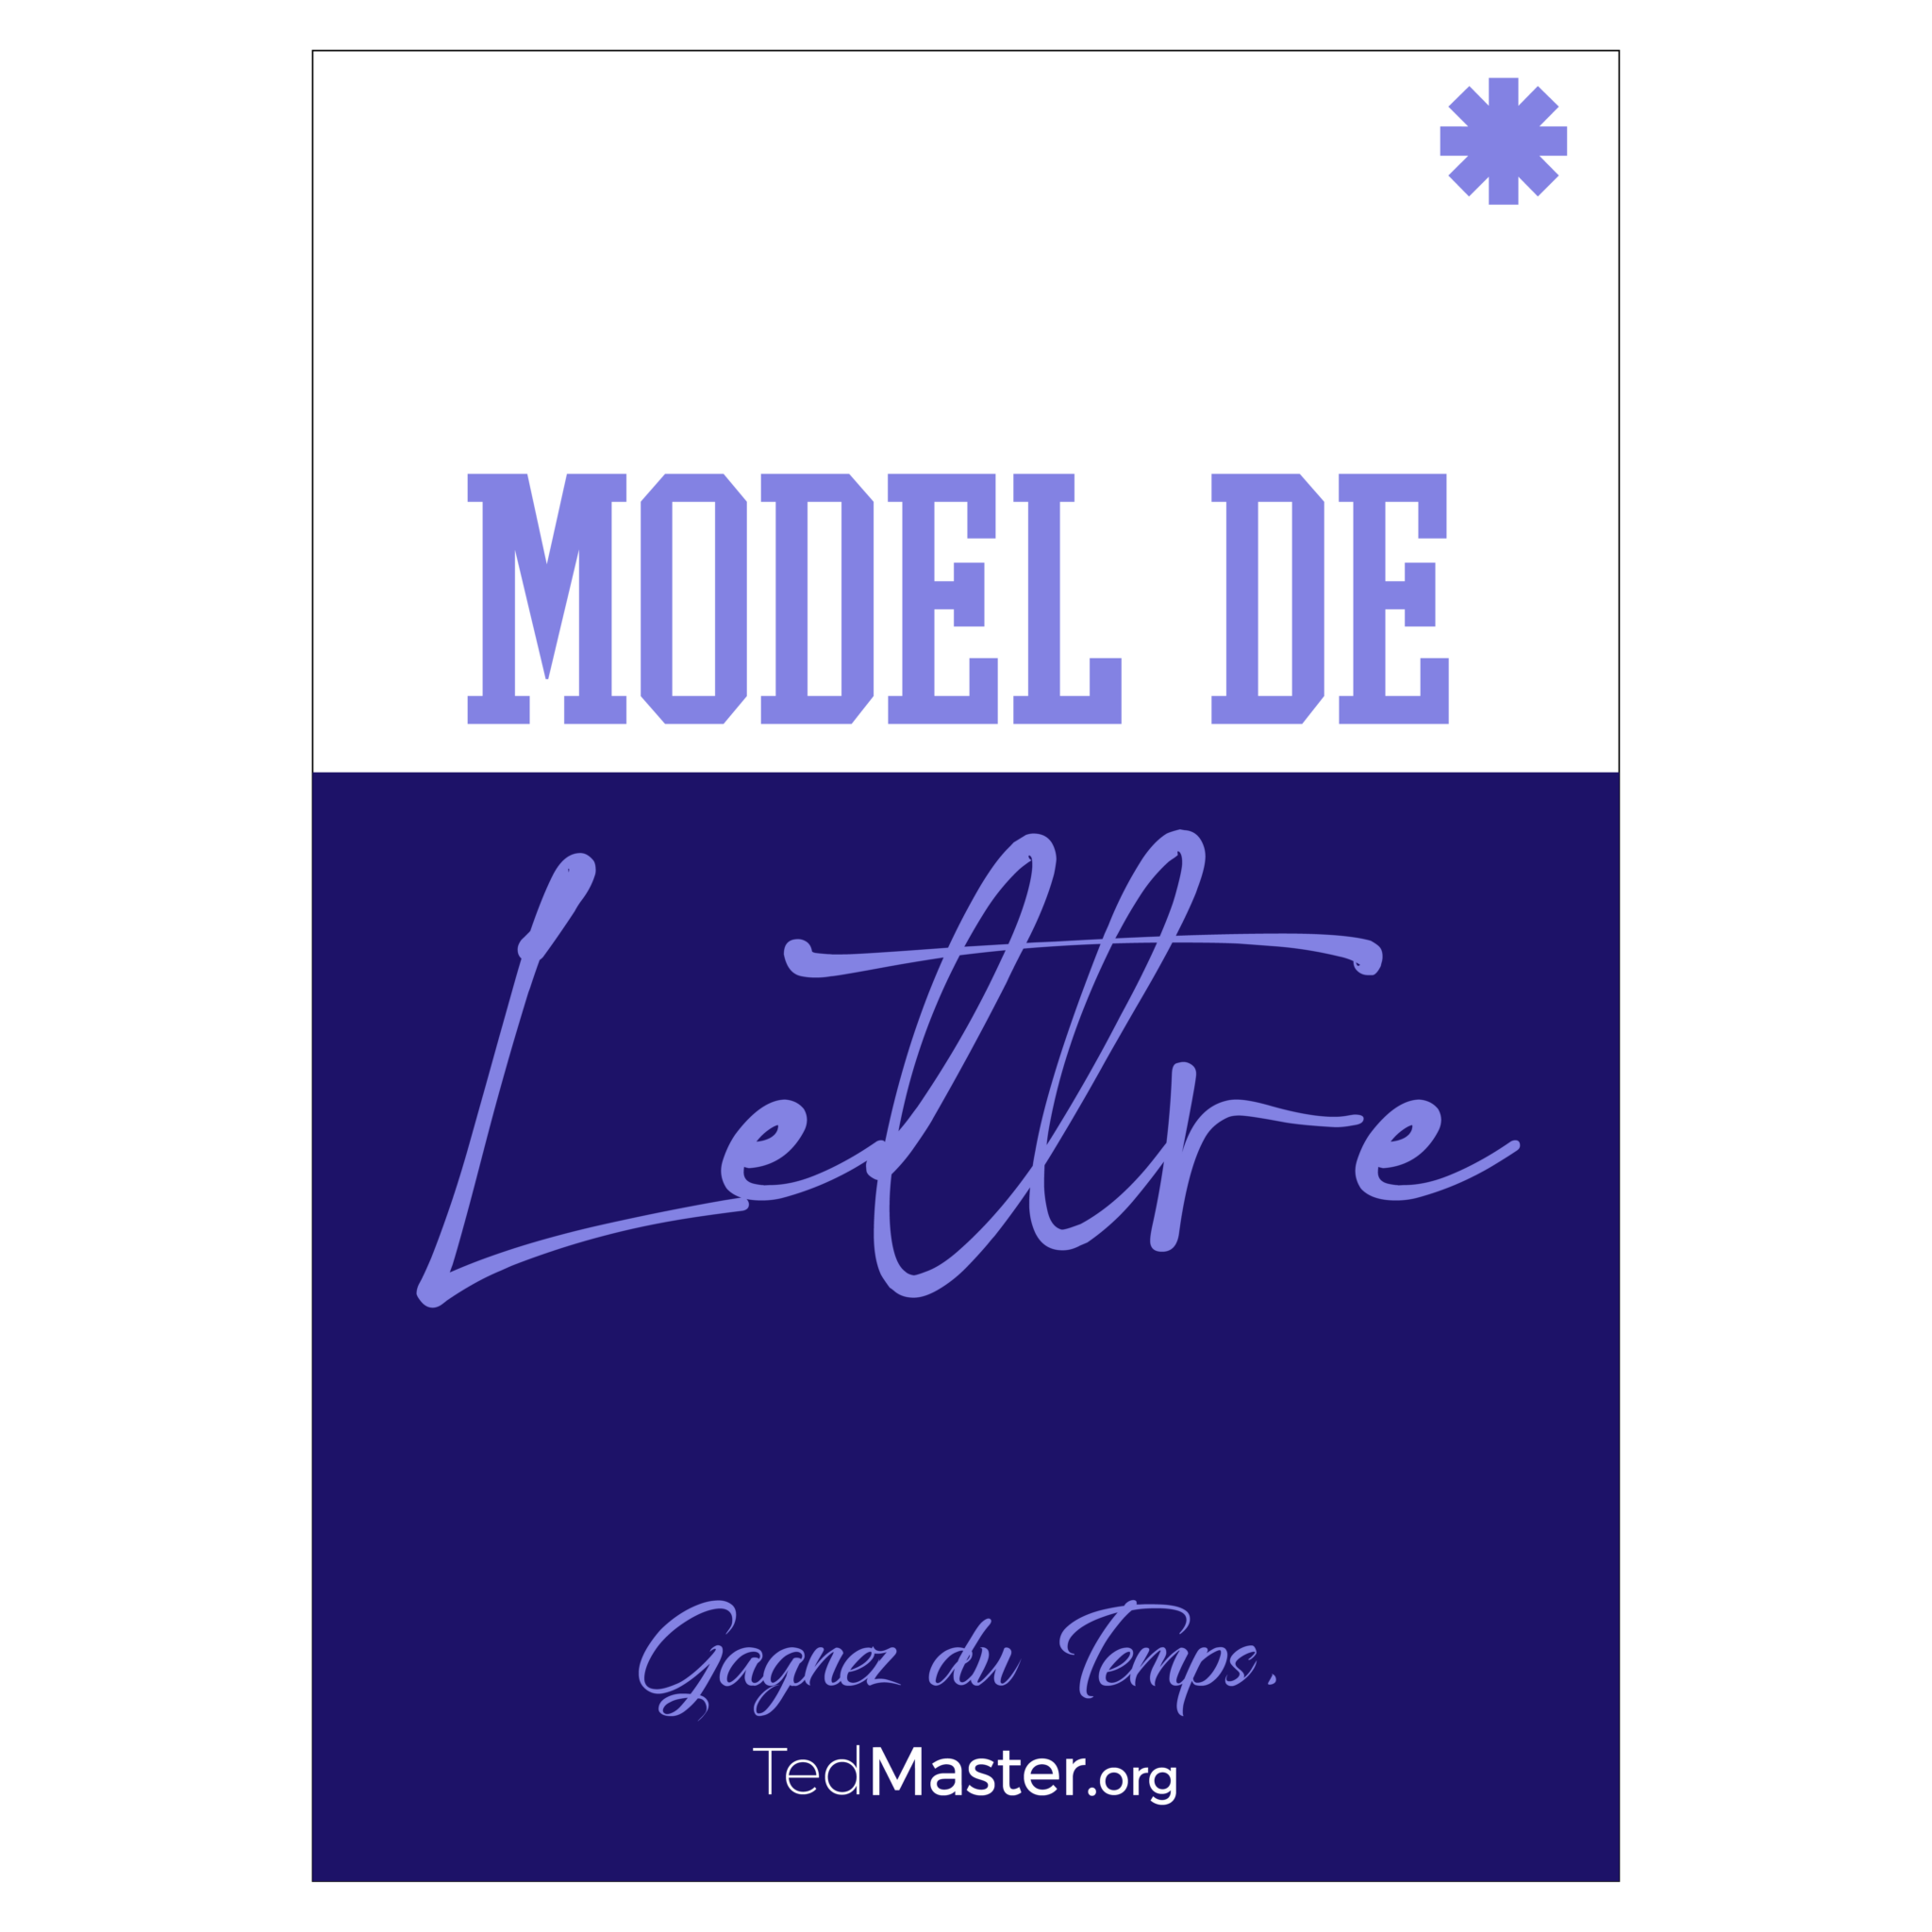 Model de Lettre sur TedMaster.org